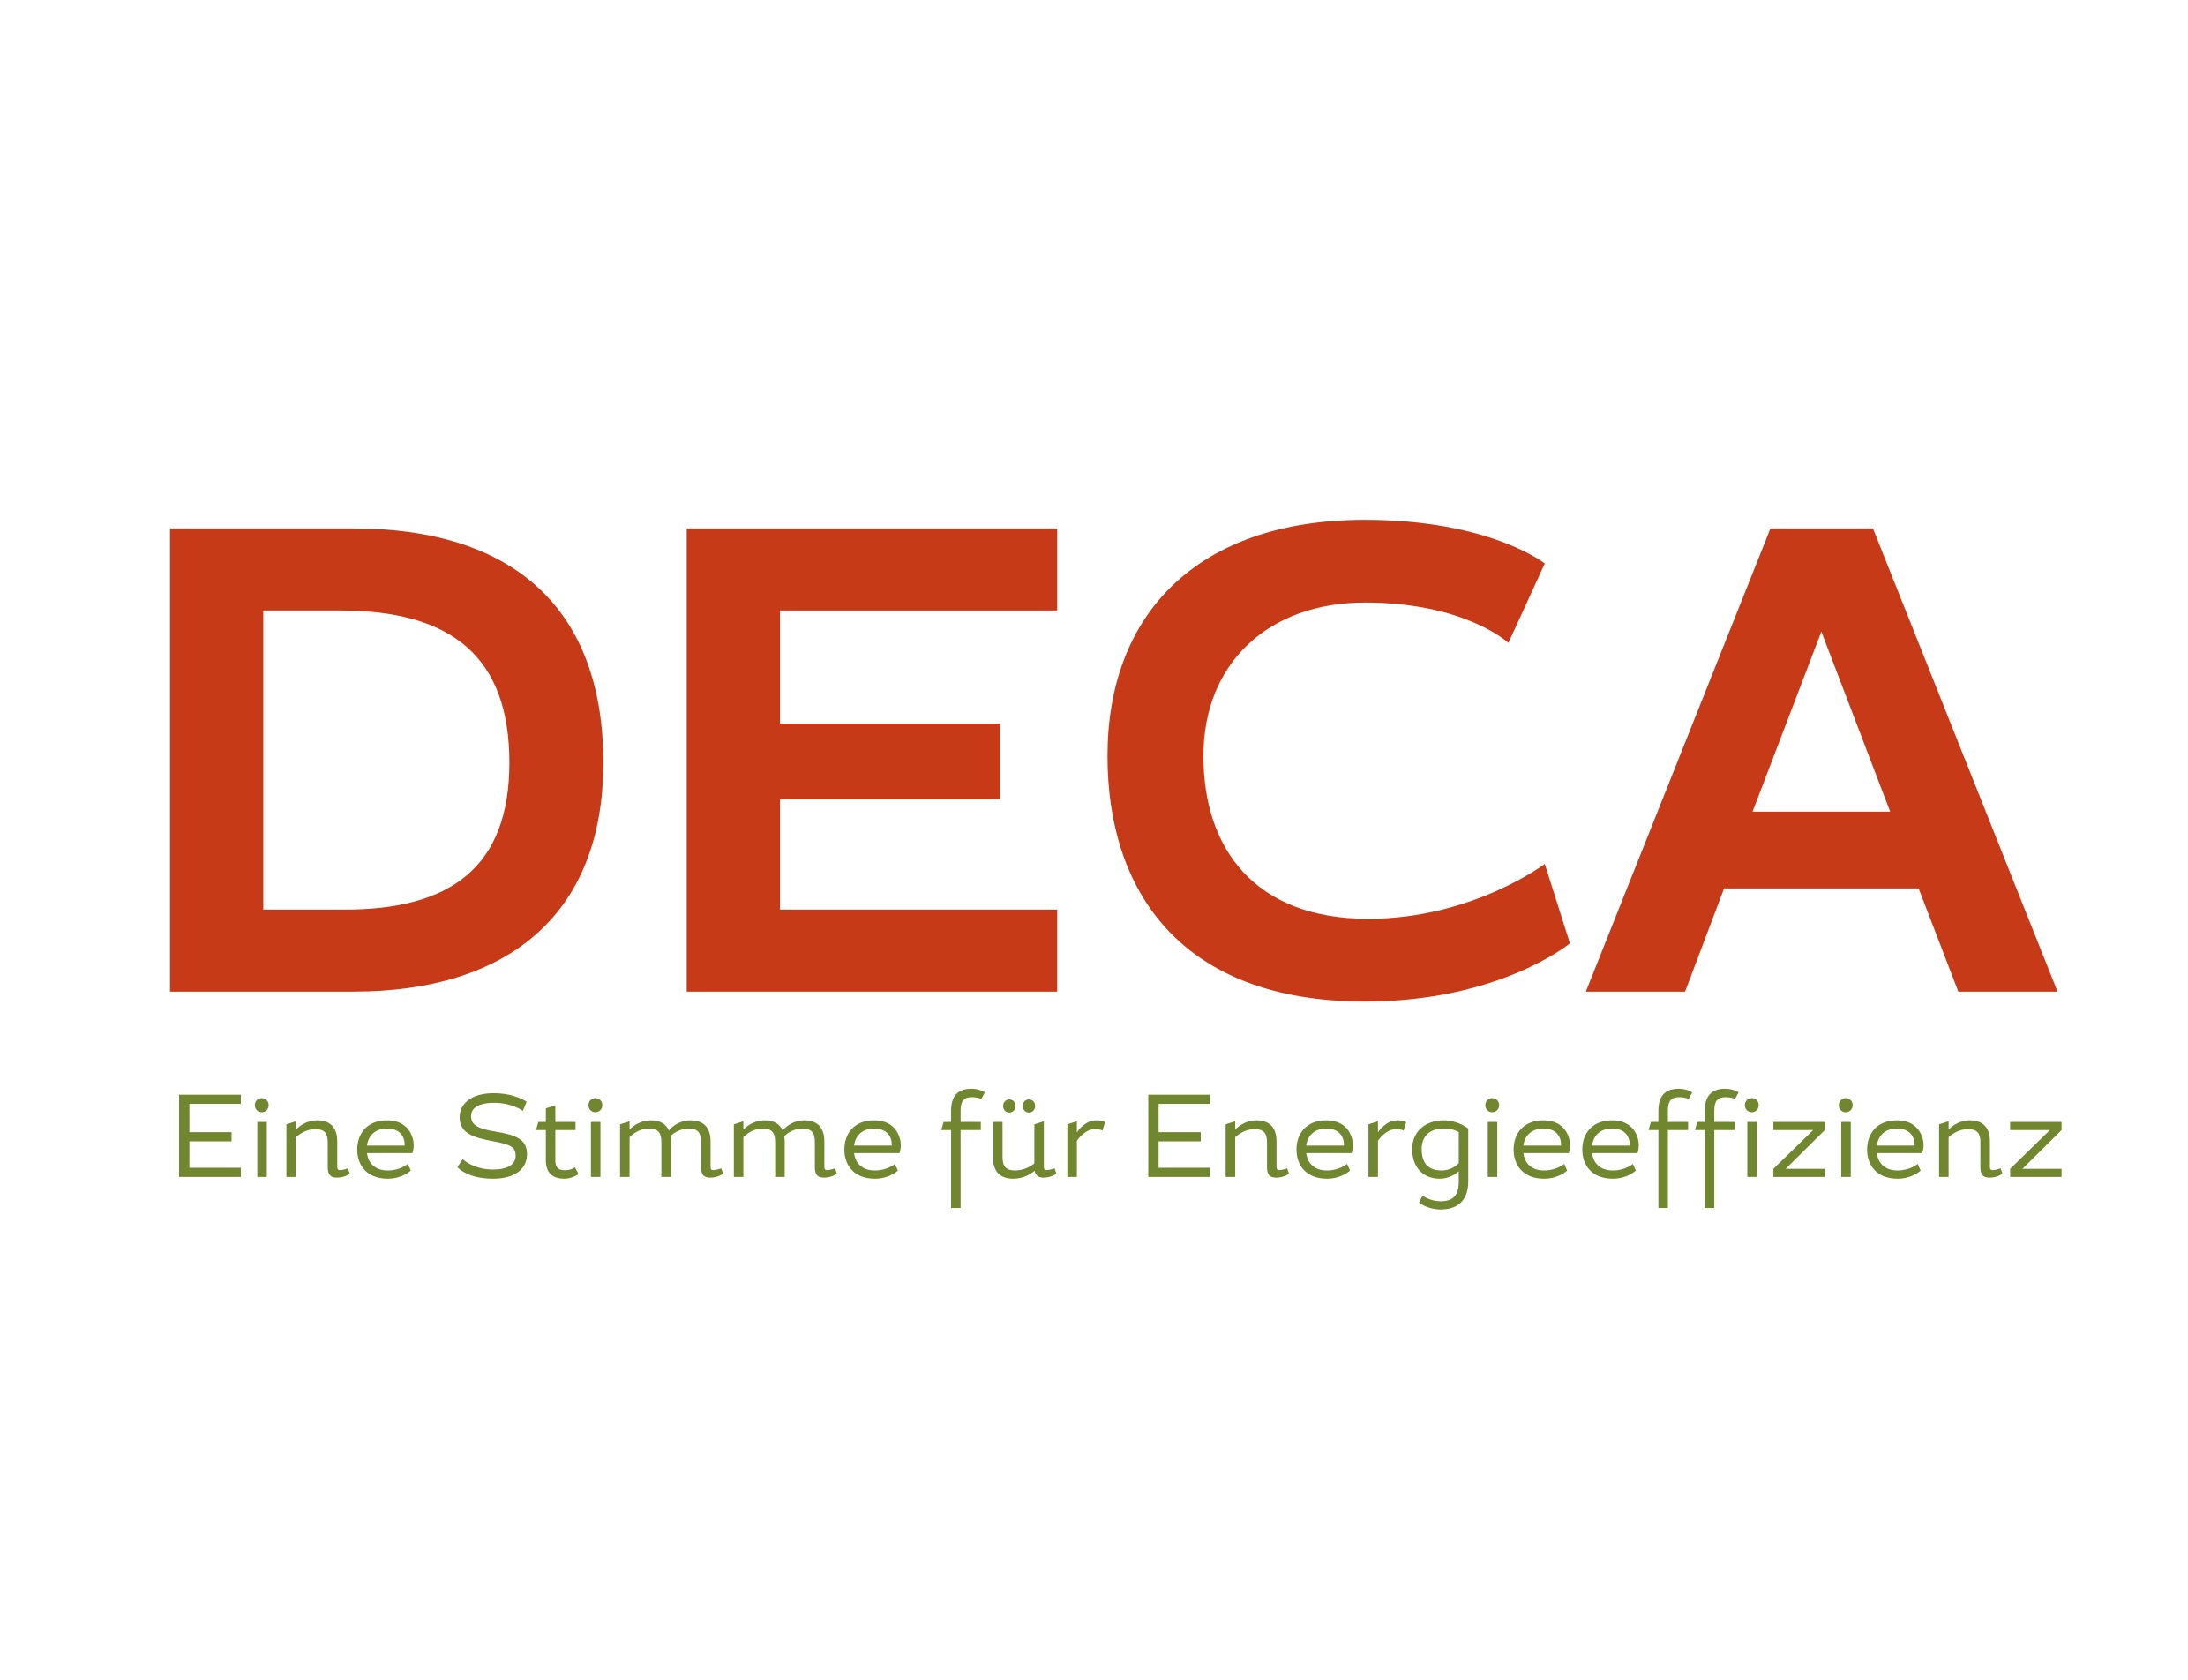 DECA - Dienstleister Energieeffizienz & Contracting Austria